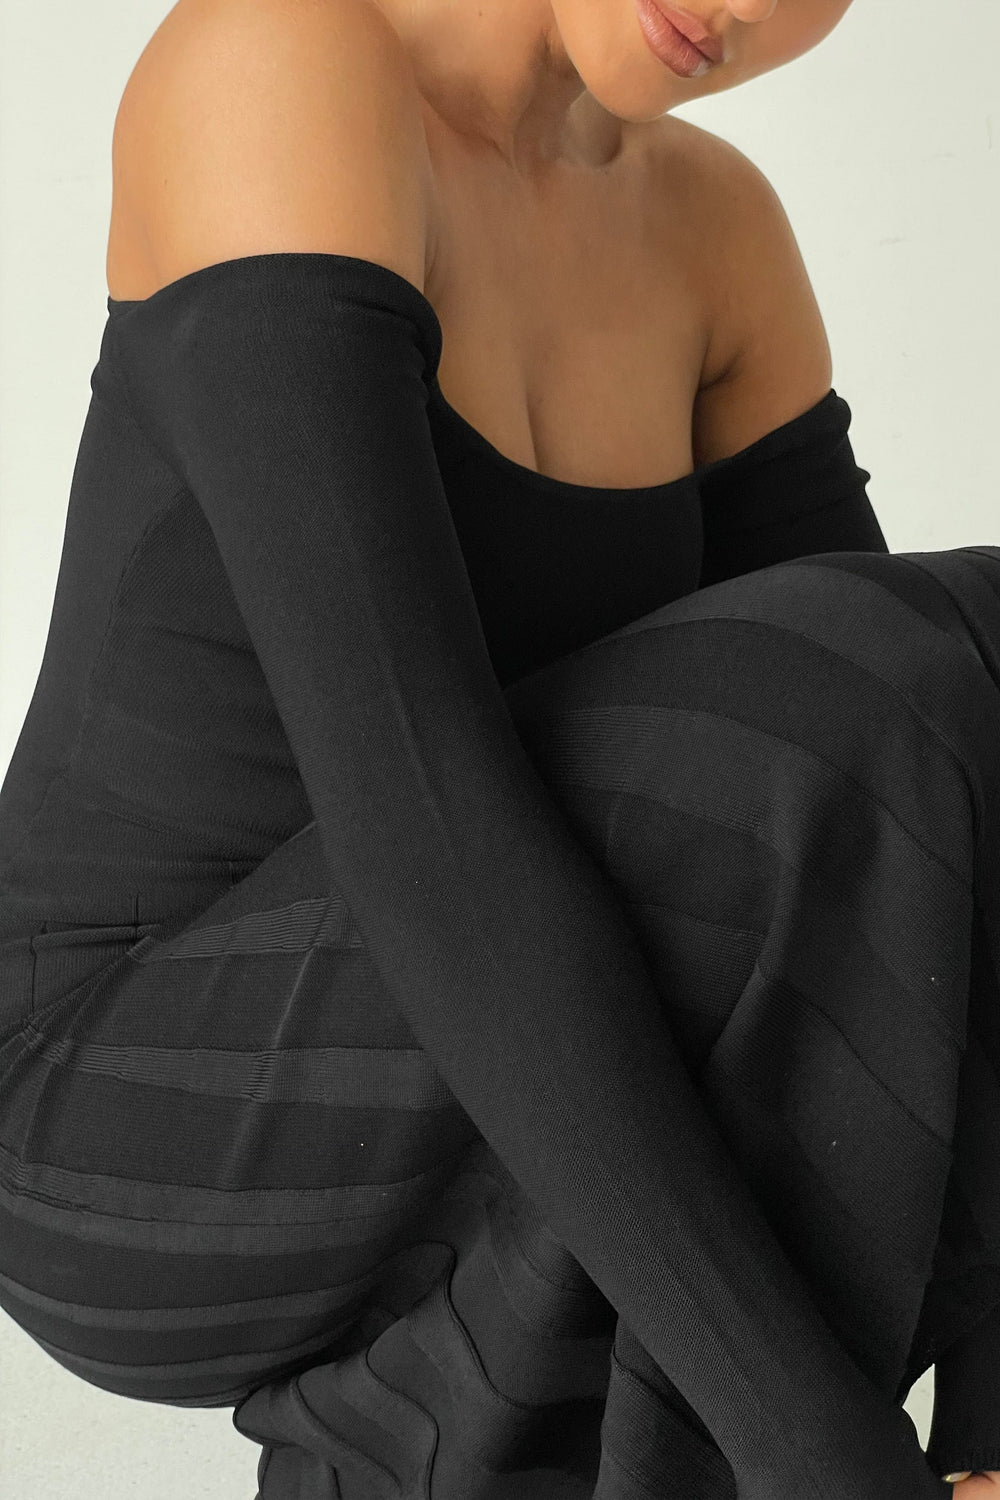 Emmeline Long Sleeve Rib Knit Midi Dress - Black